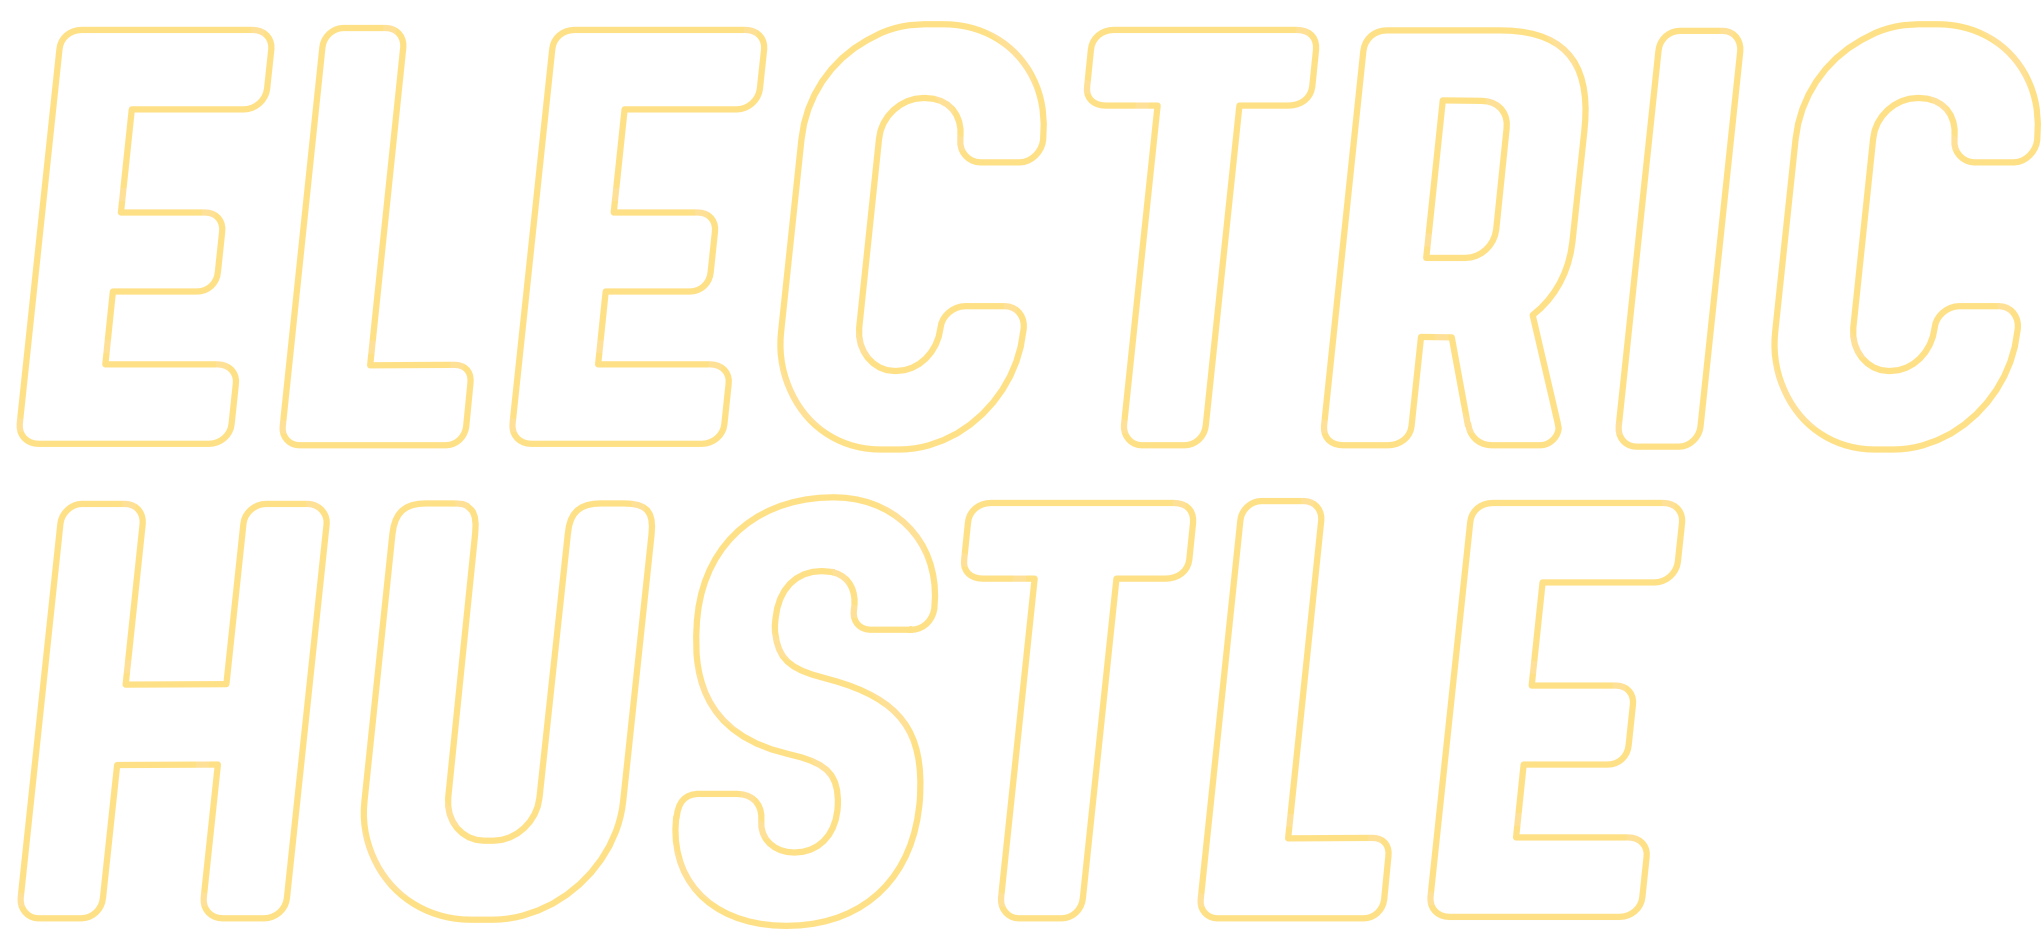 Electric Hustle